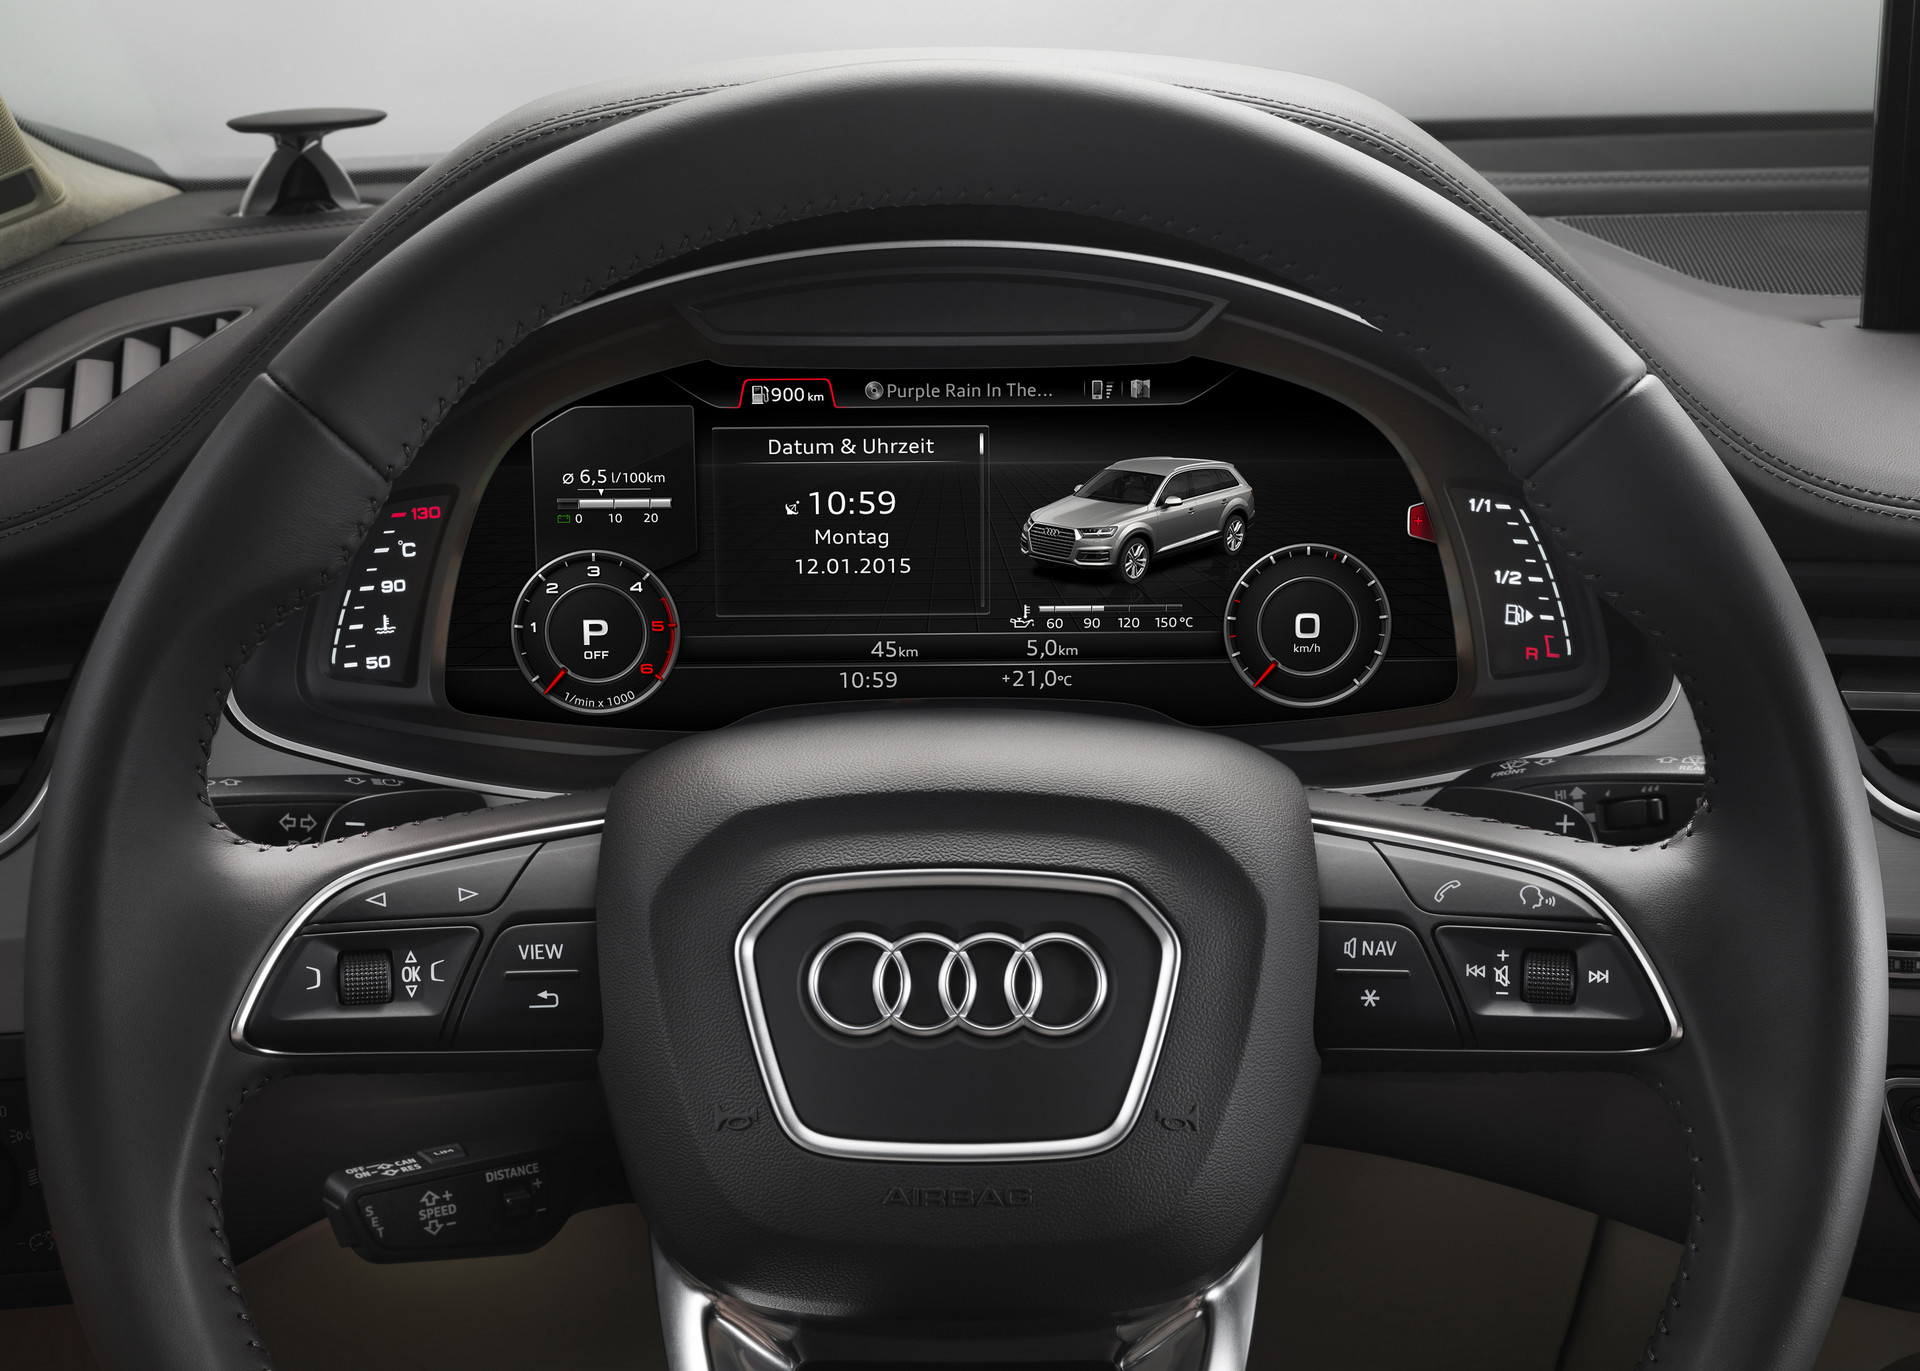 Audi Q7 © Volkswagen AG